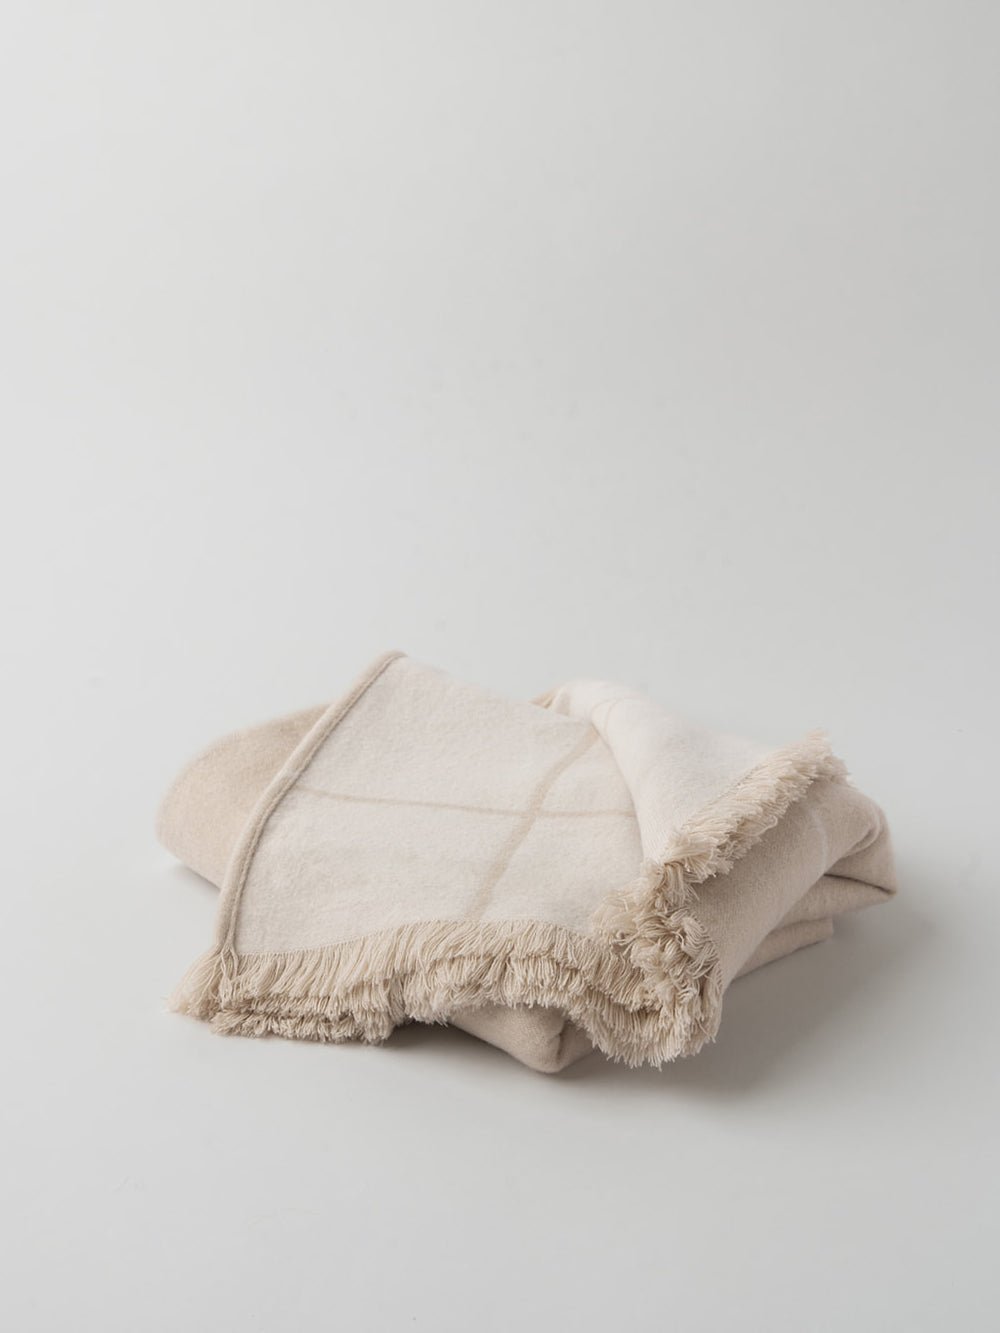 Beige windowpane blanket half folded showing tasseled edge 